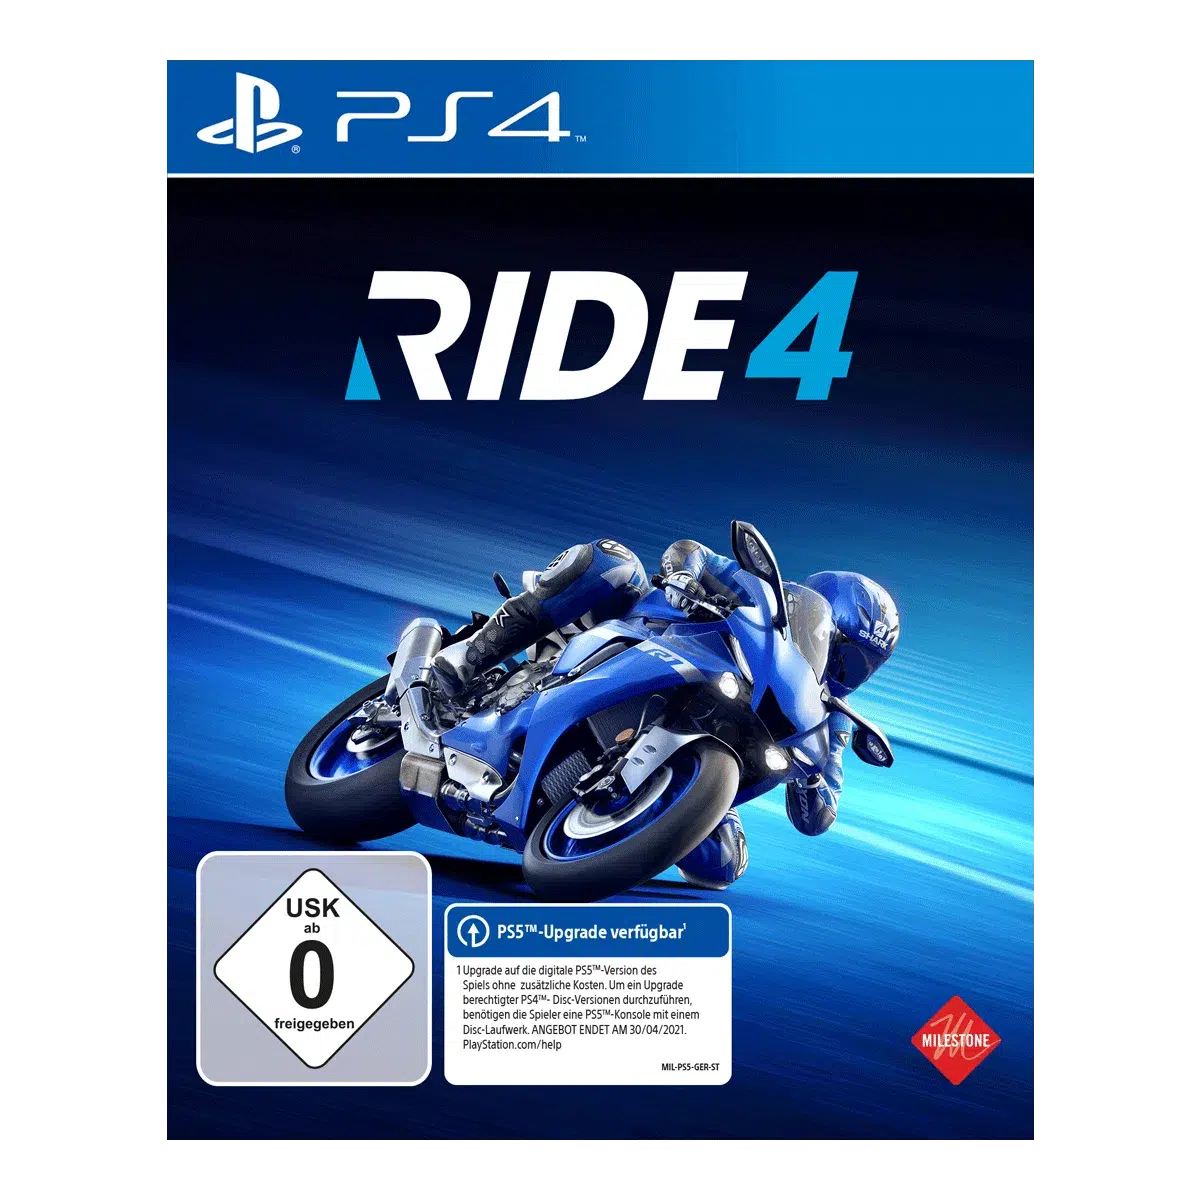 Ride 4 Playstation 4